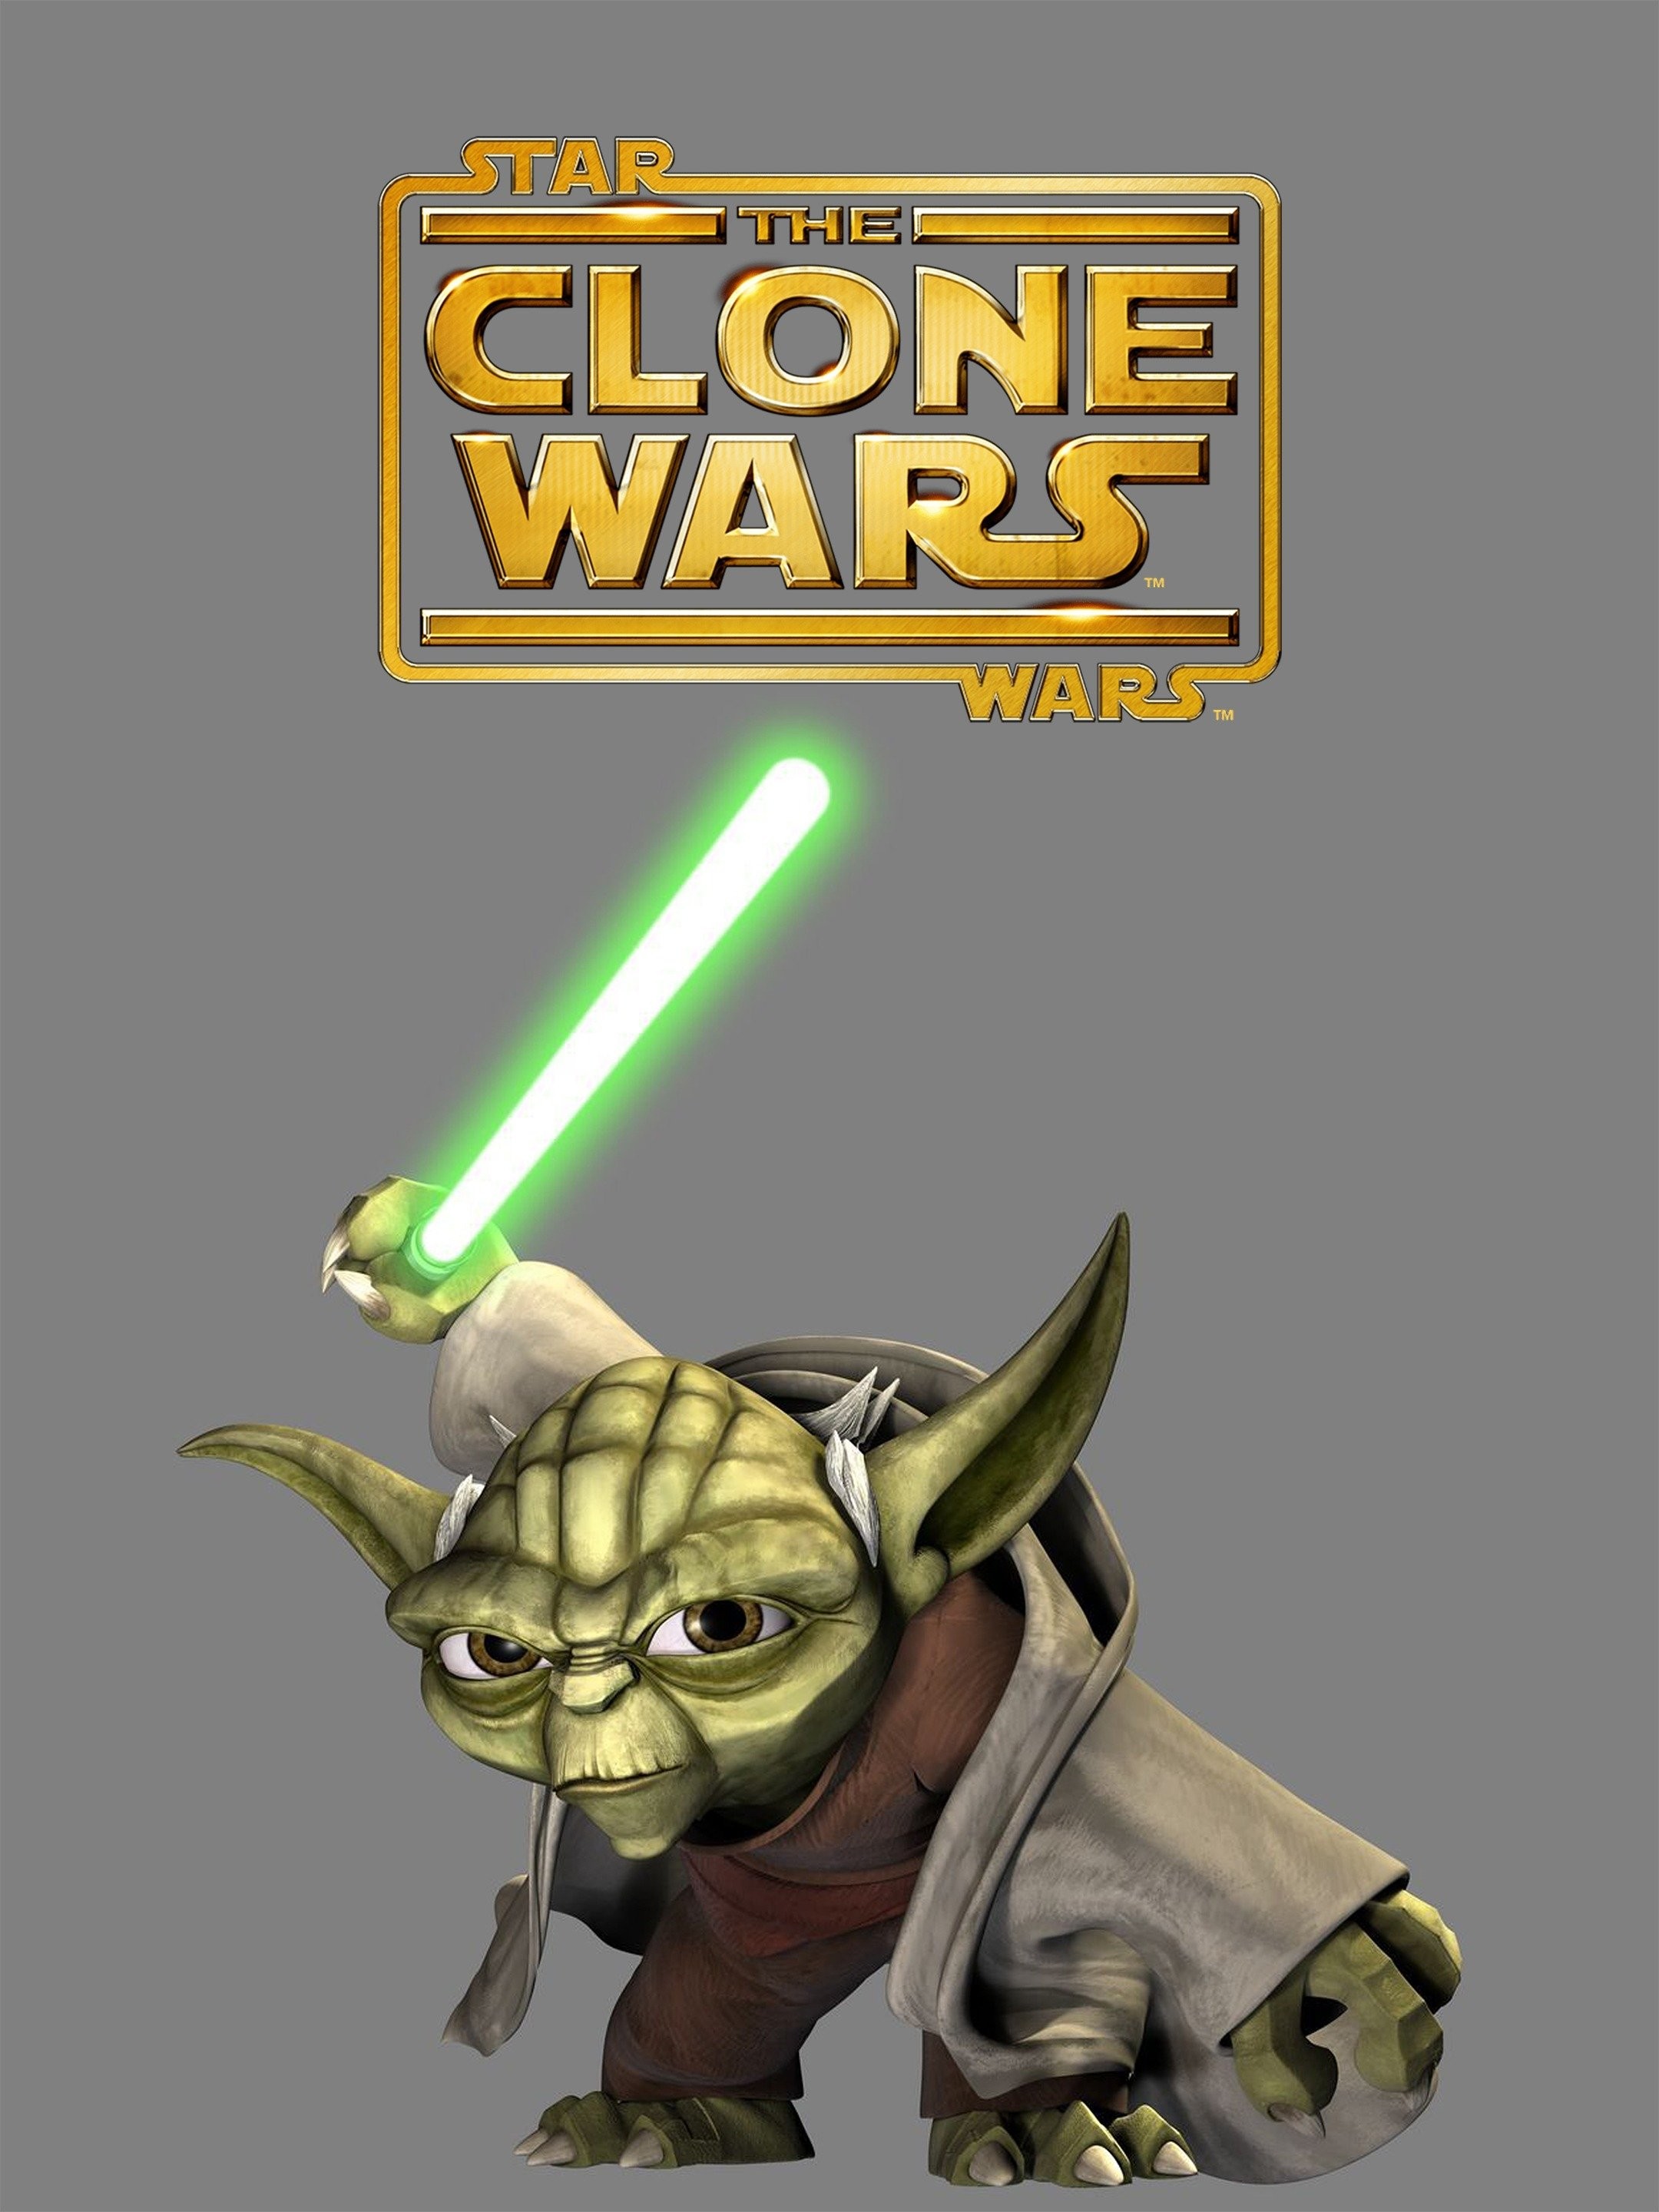 Star Wars: The Clone Wars - Season 1 Review